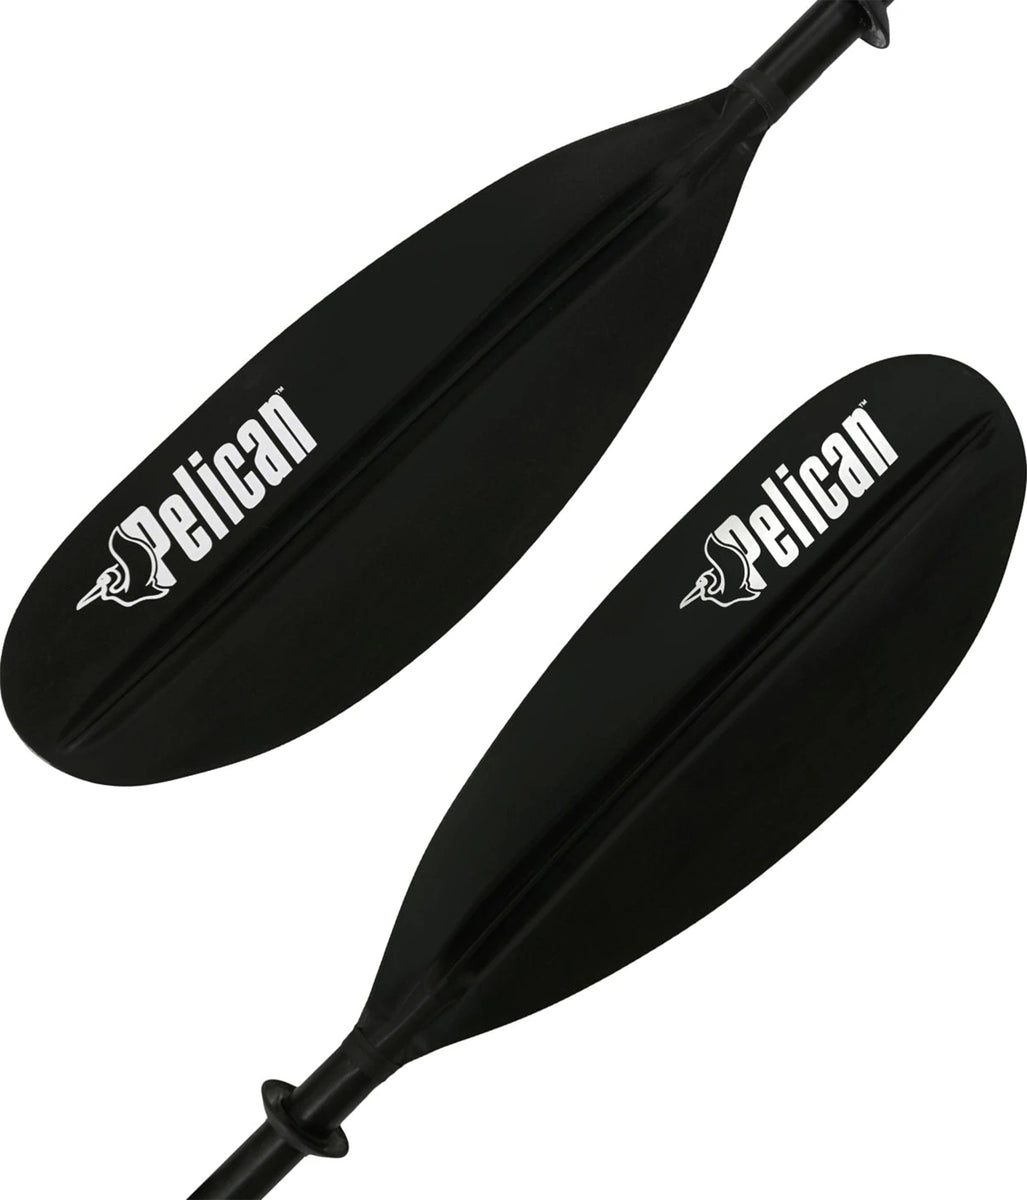 Pelican Sports Standard Kayak Paddle - 220cm OS Black